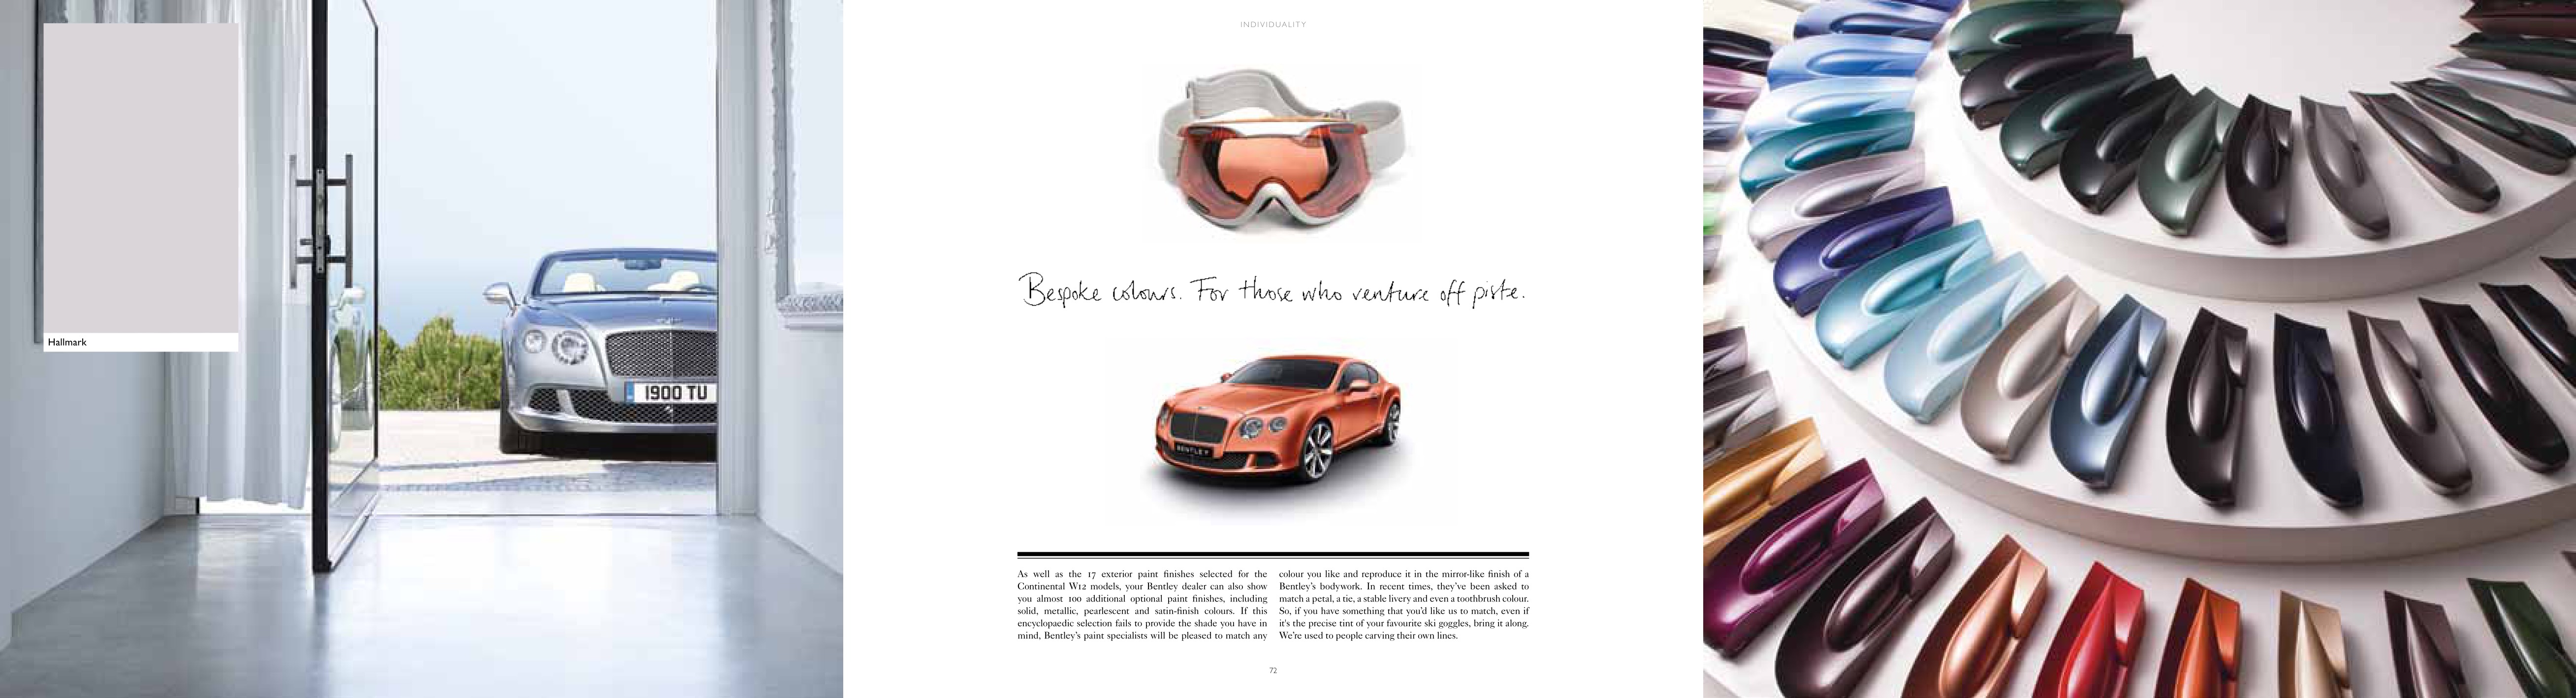 2013 Bentley Continental GT Brochure Page 7